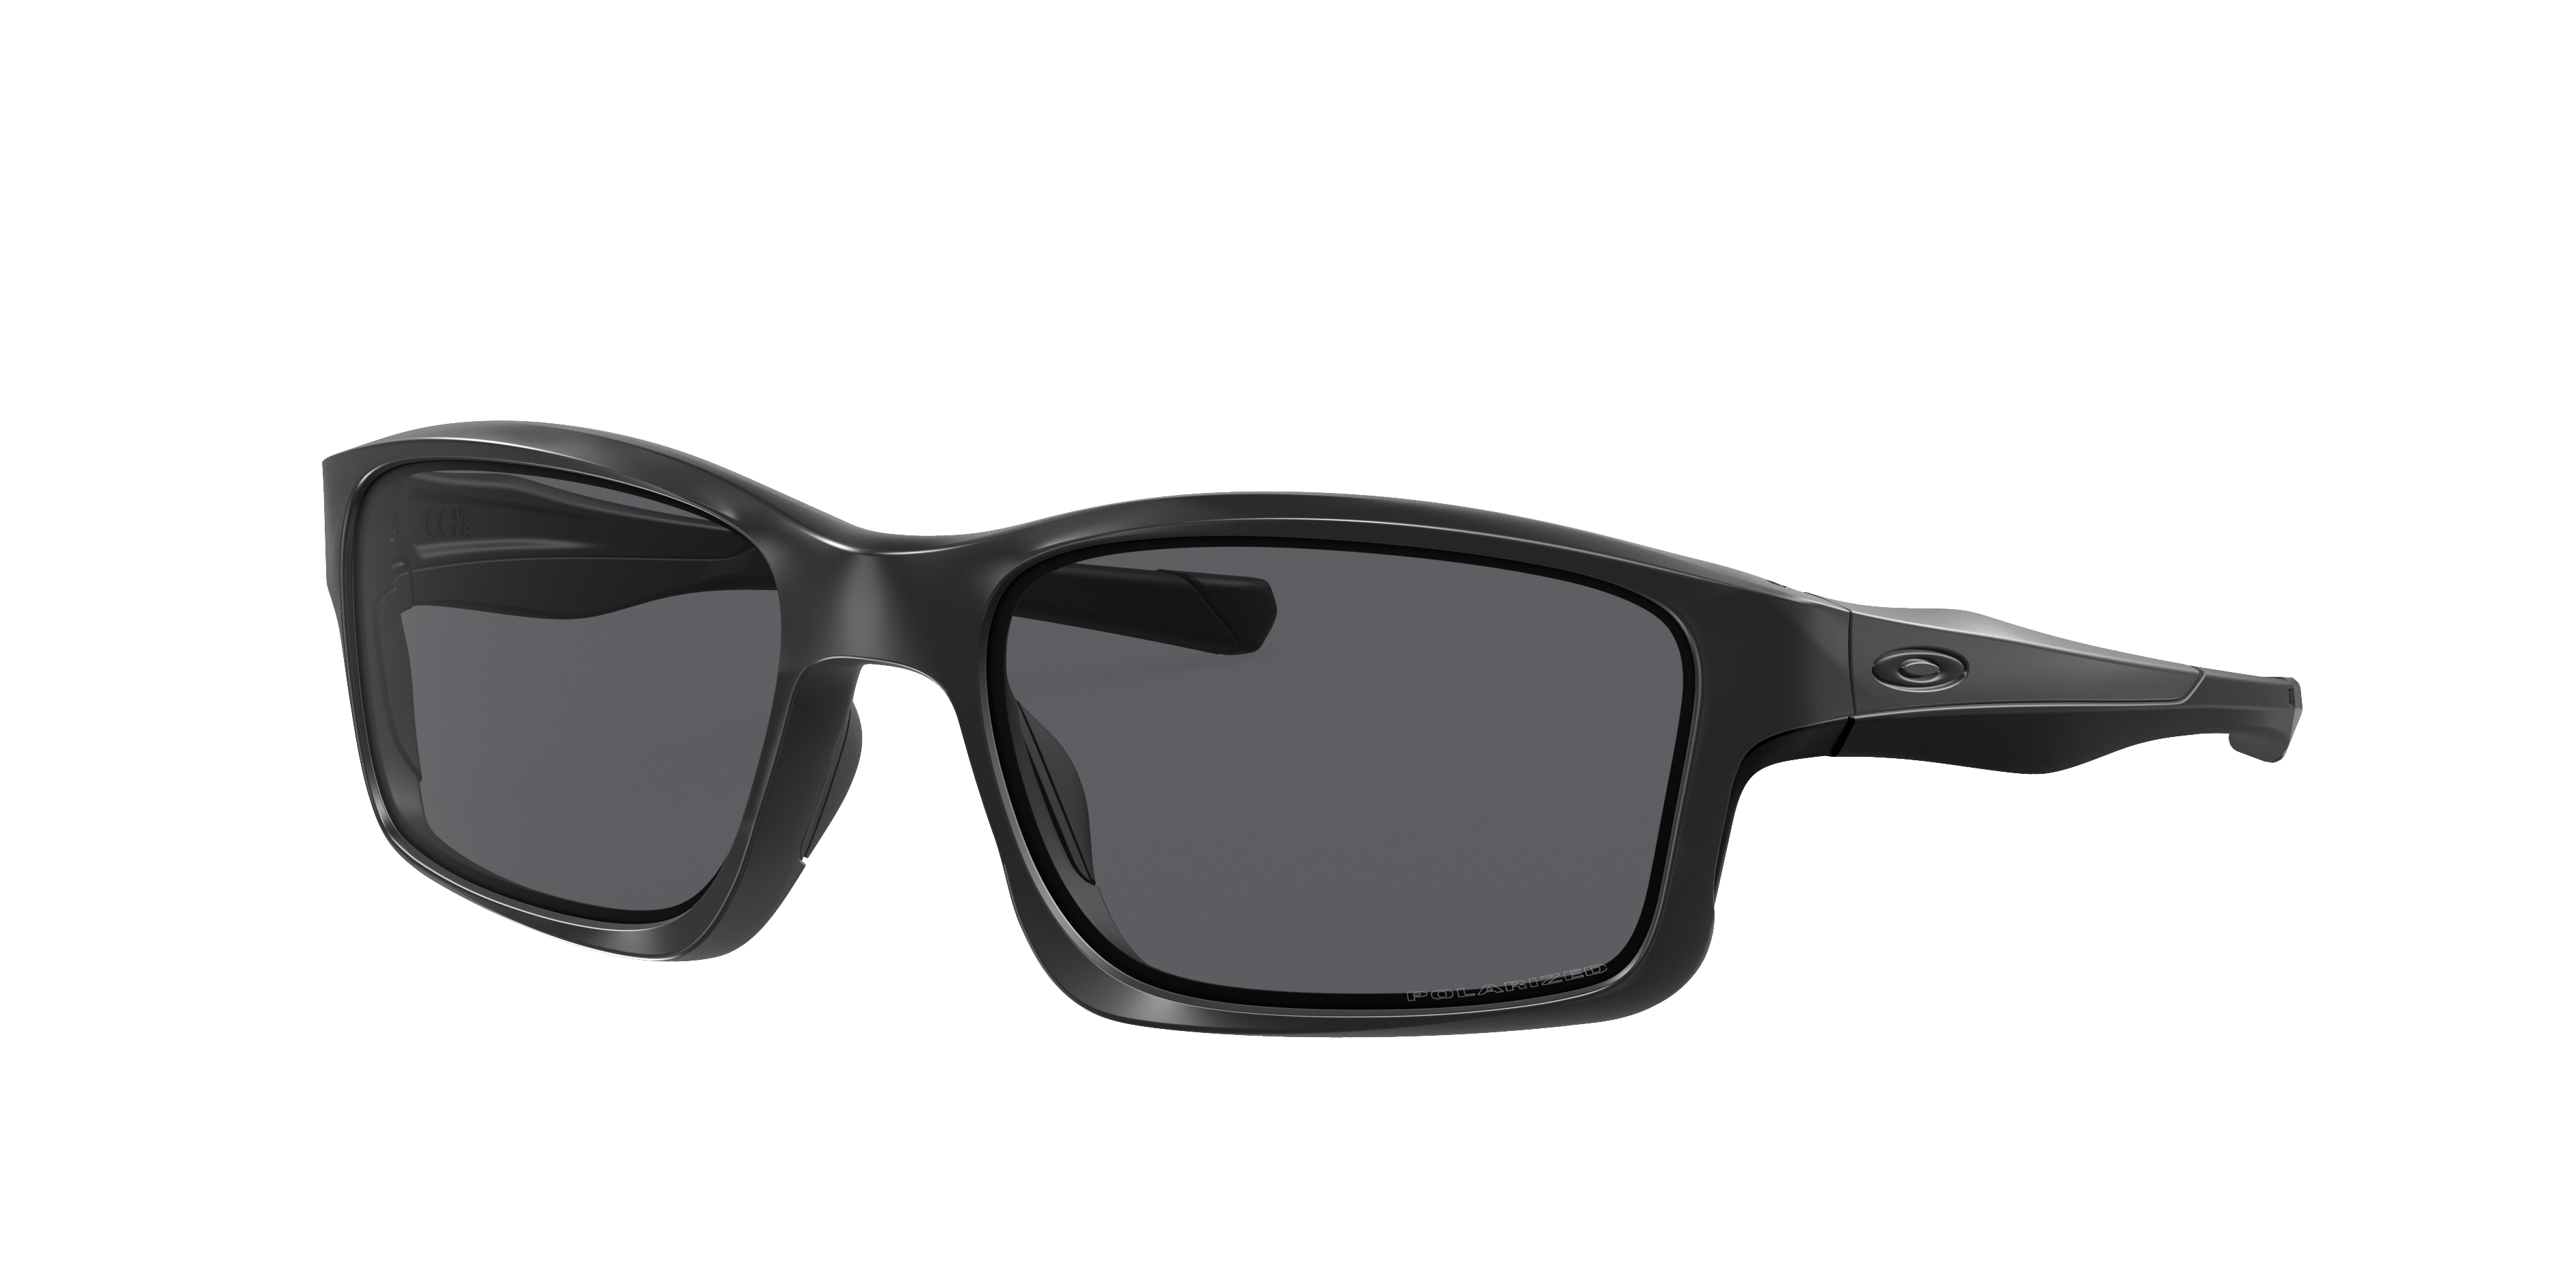 OAKLEY OO9247 Chainlink Matte Black - Men Sunglasses, Grey Polarized Lens